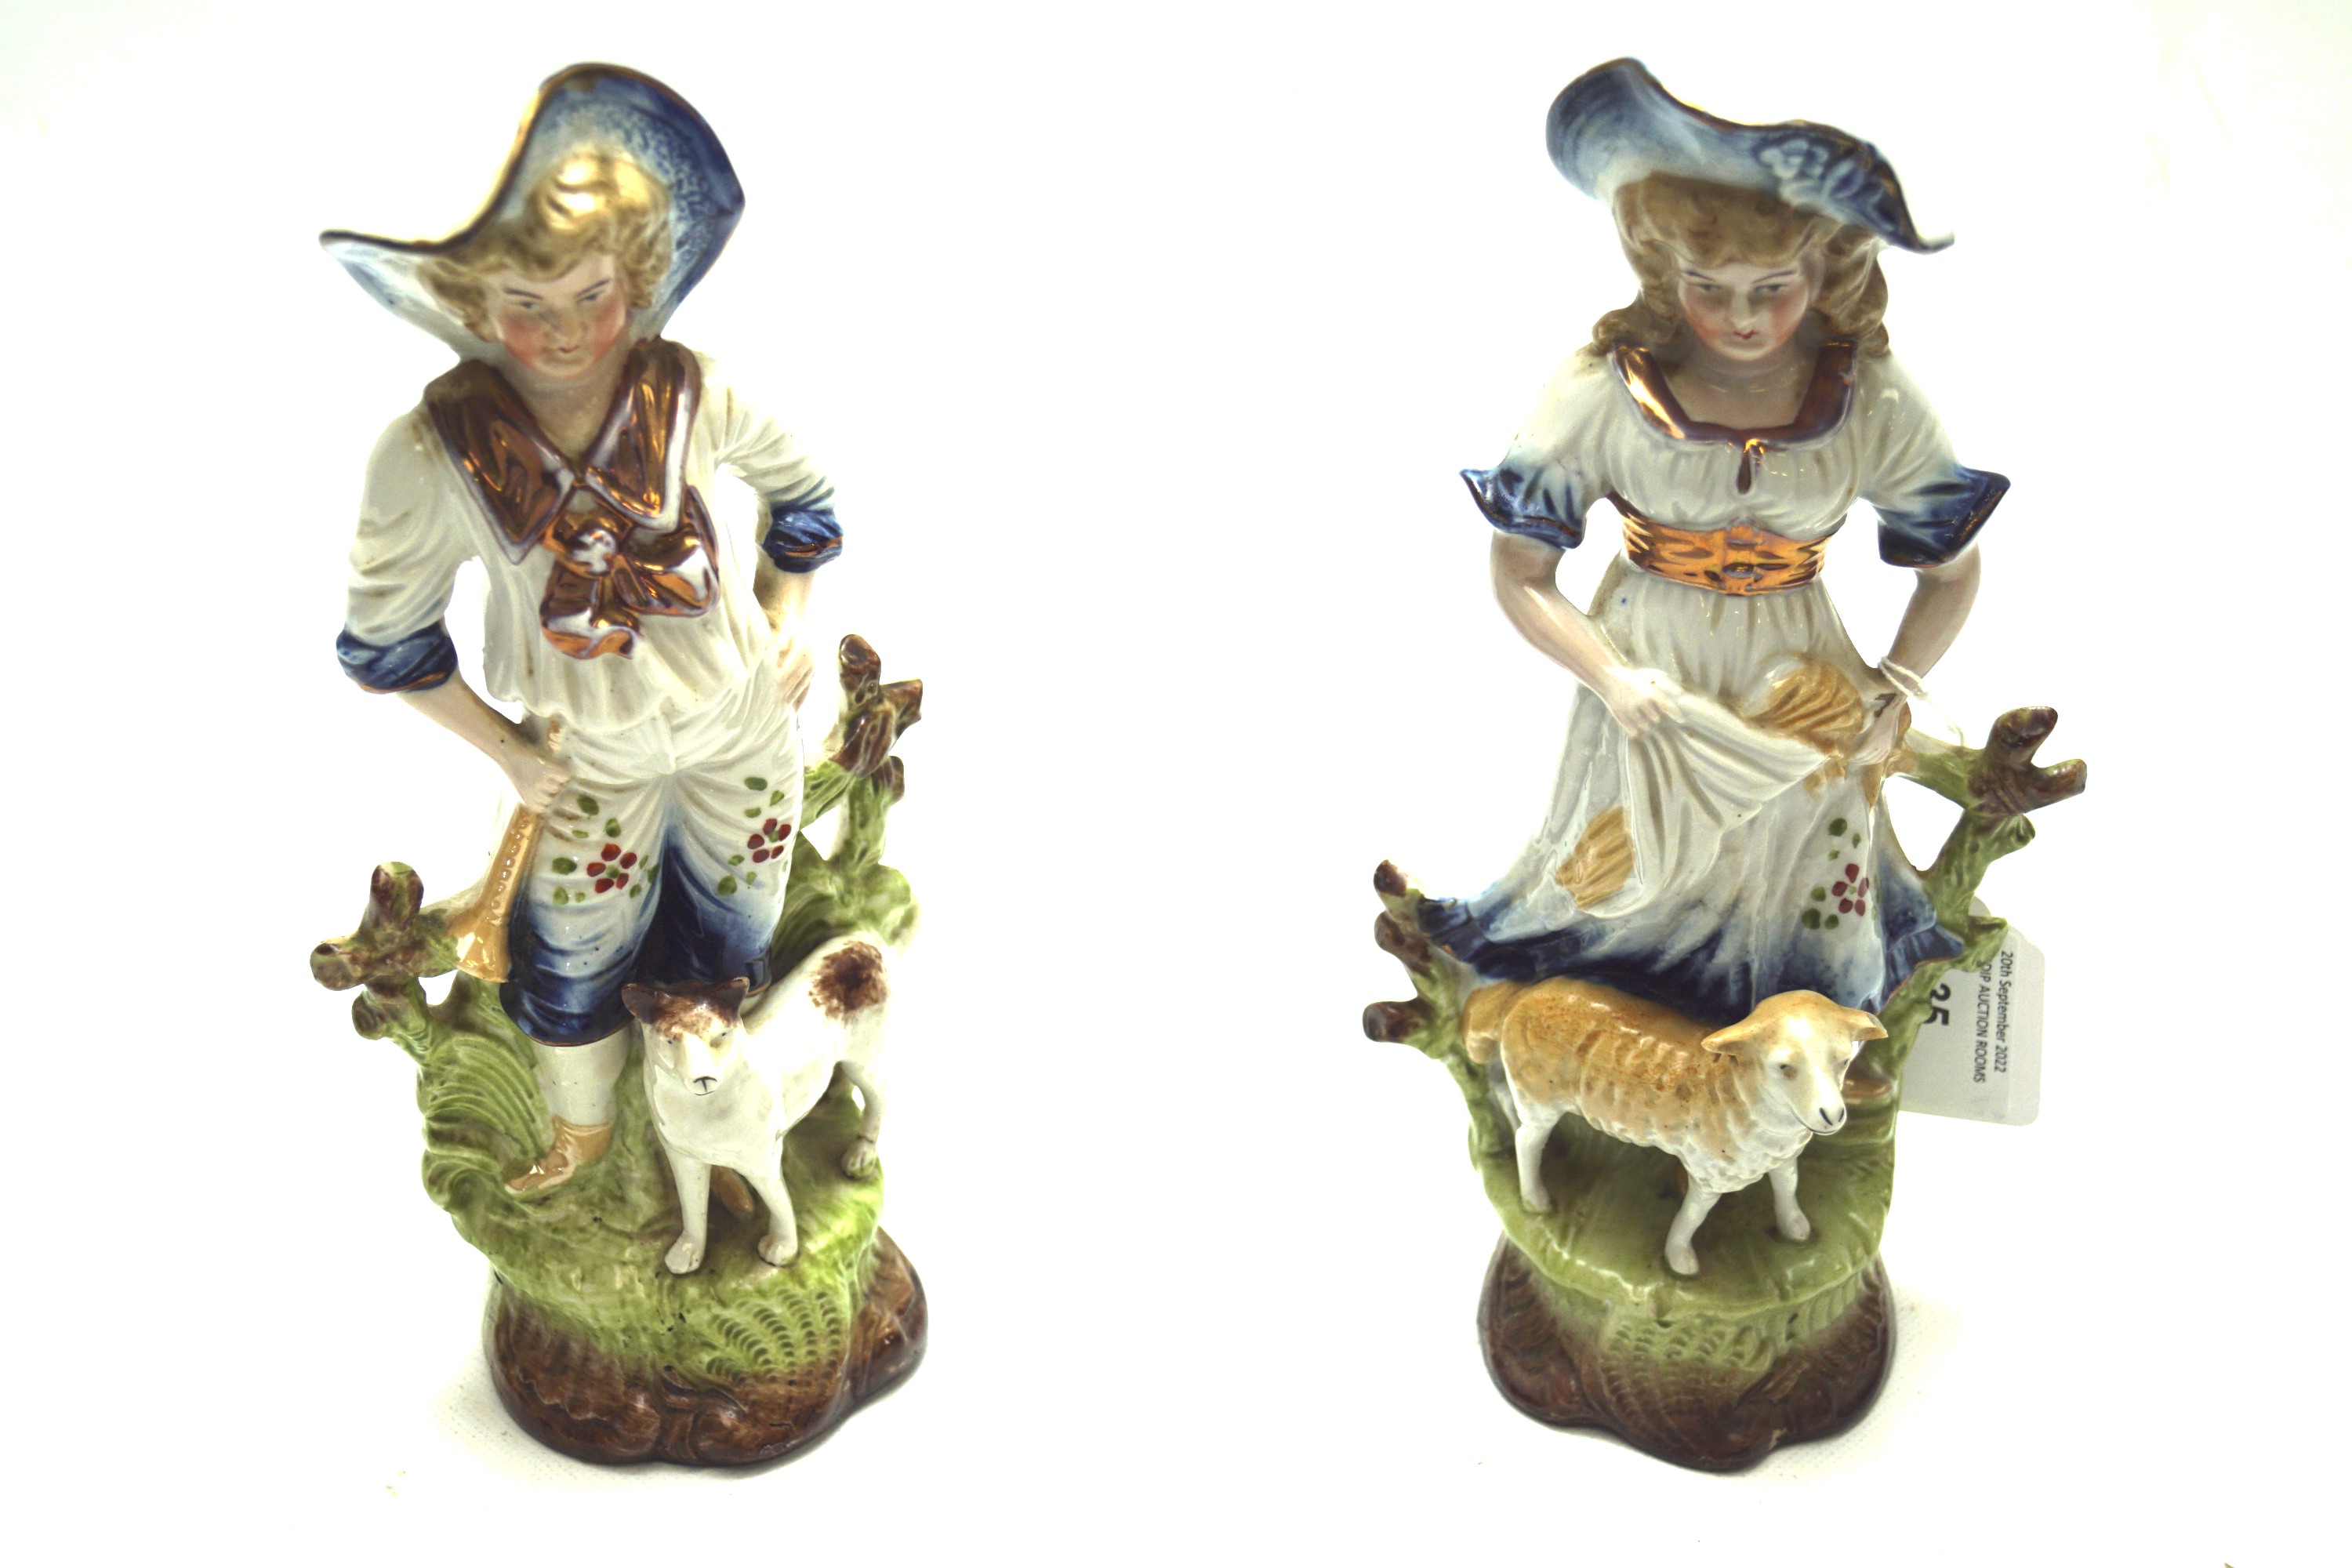 Ceramic shepherd and shepherdess figures.